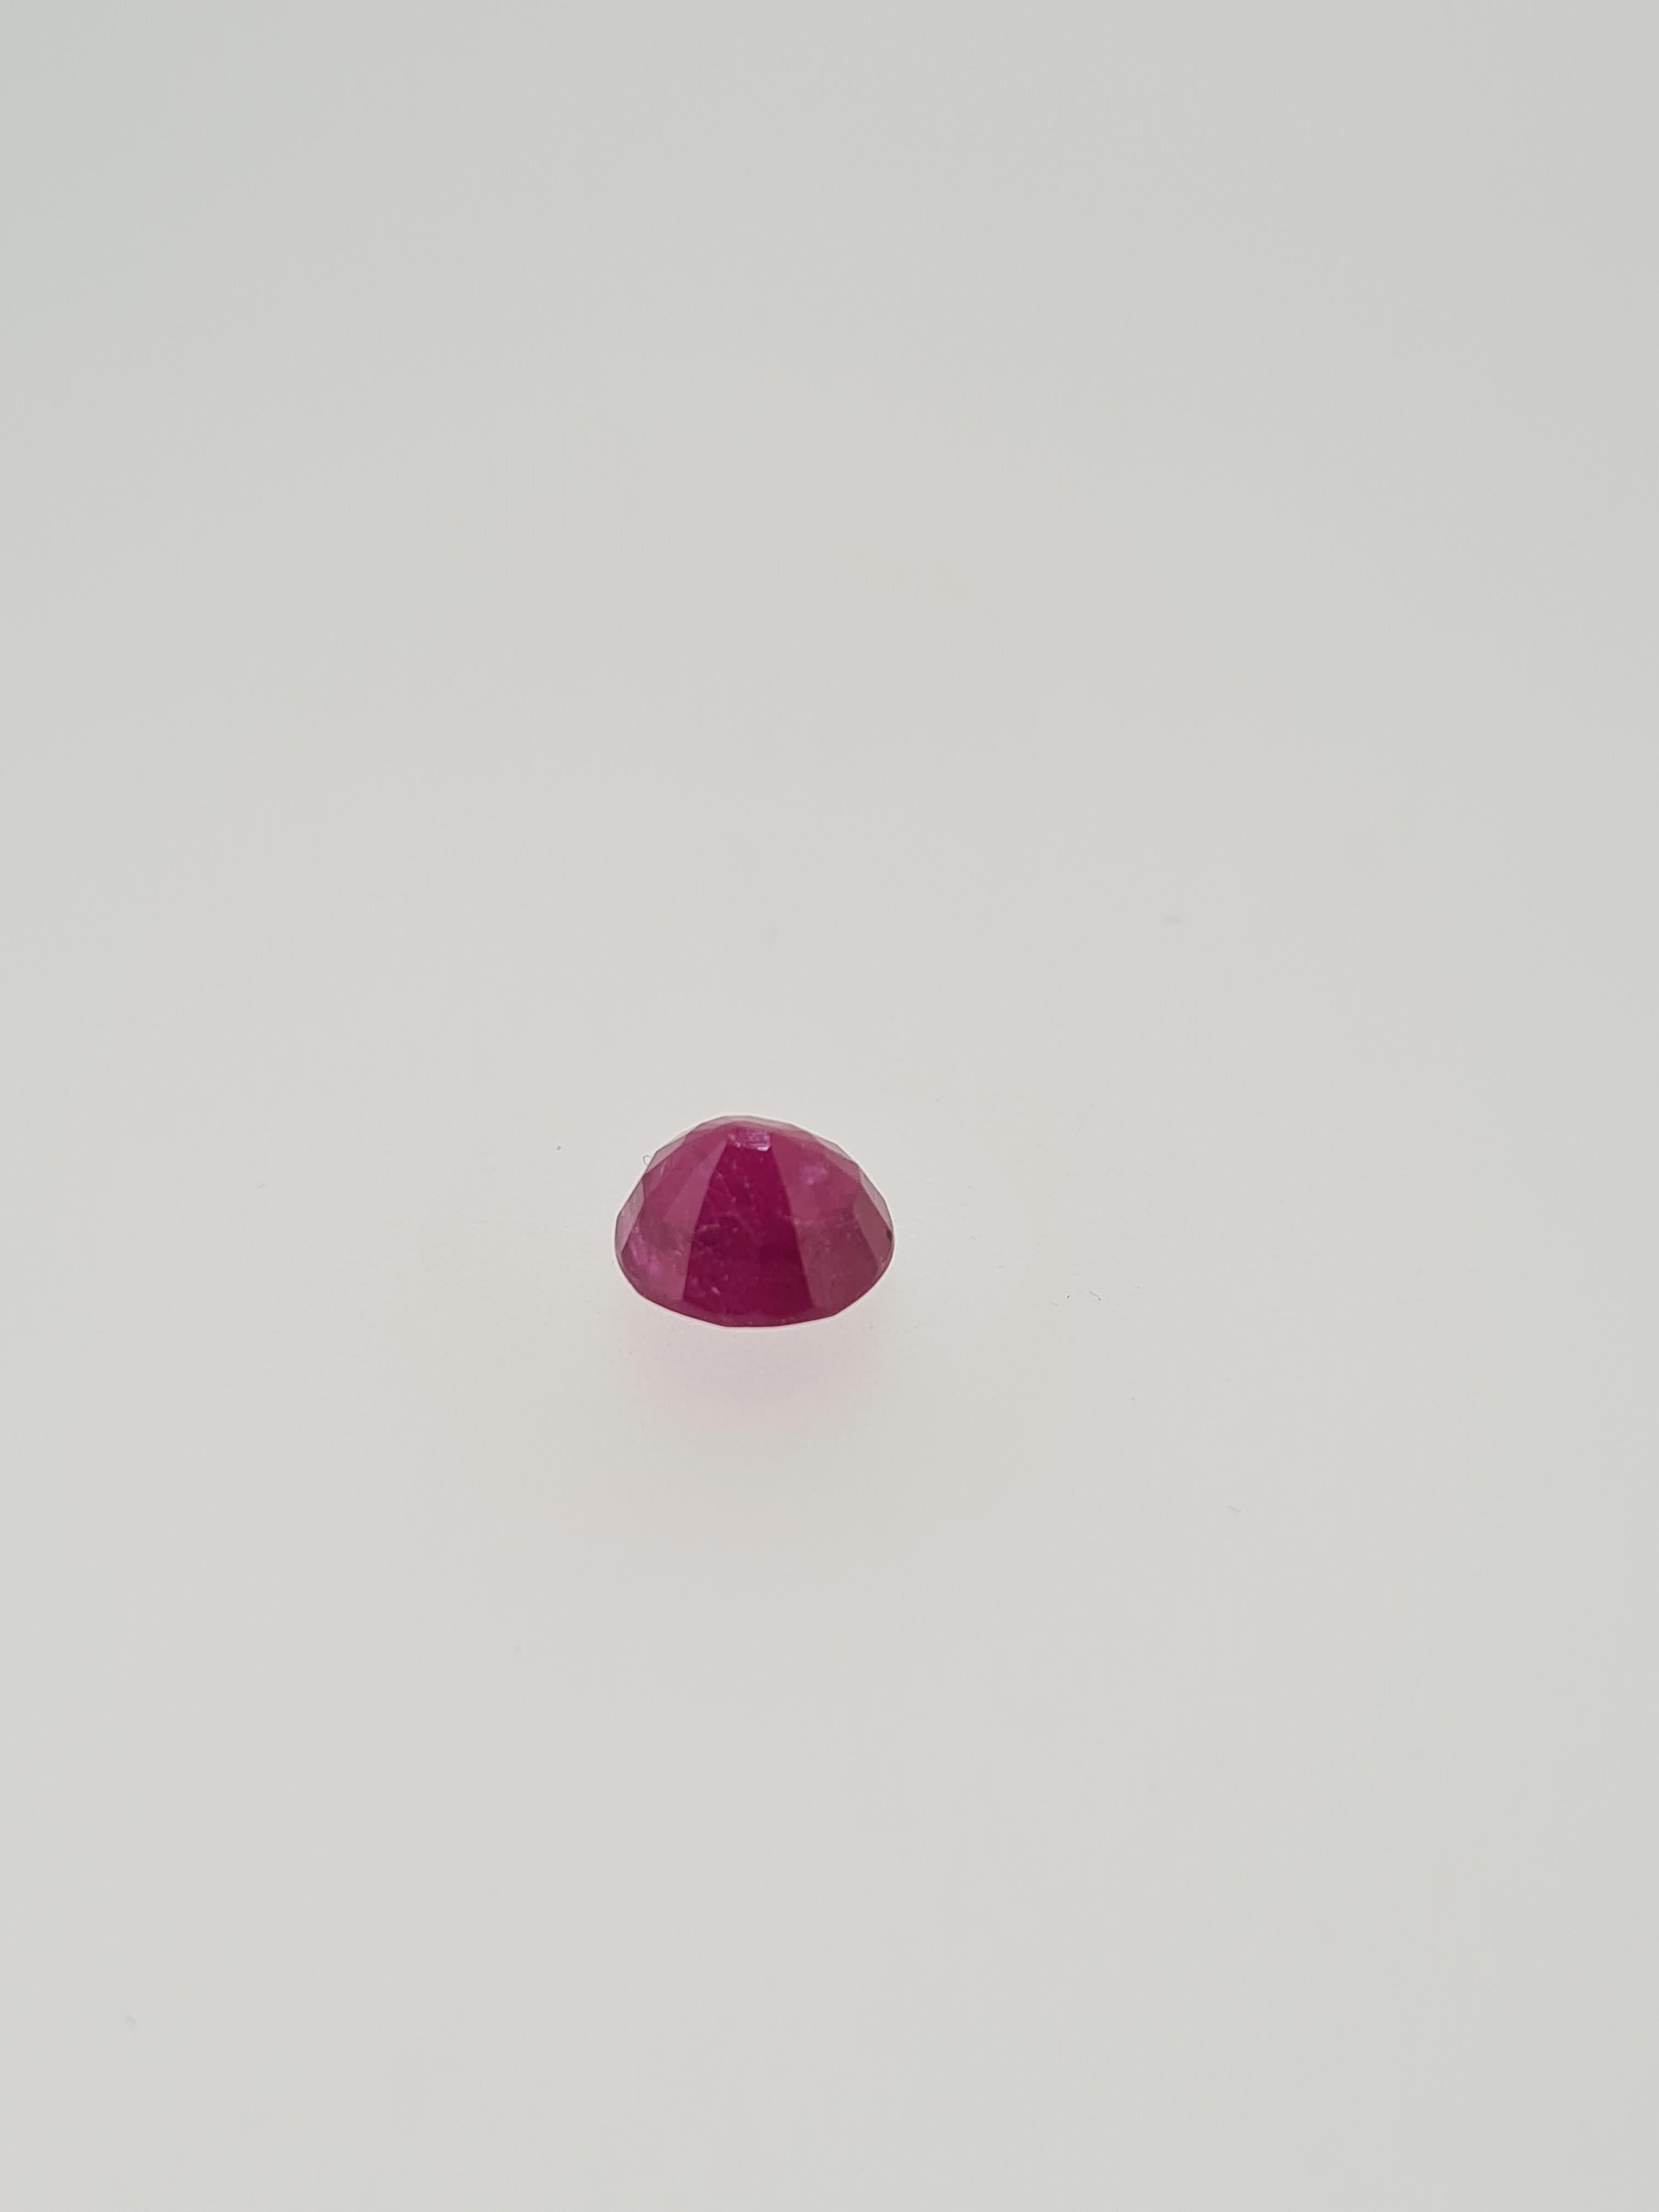 Ruby gem stone oval cut - Image 2 of 6